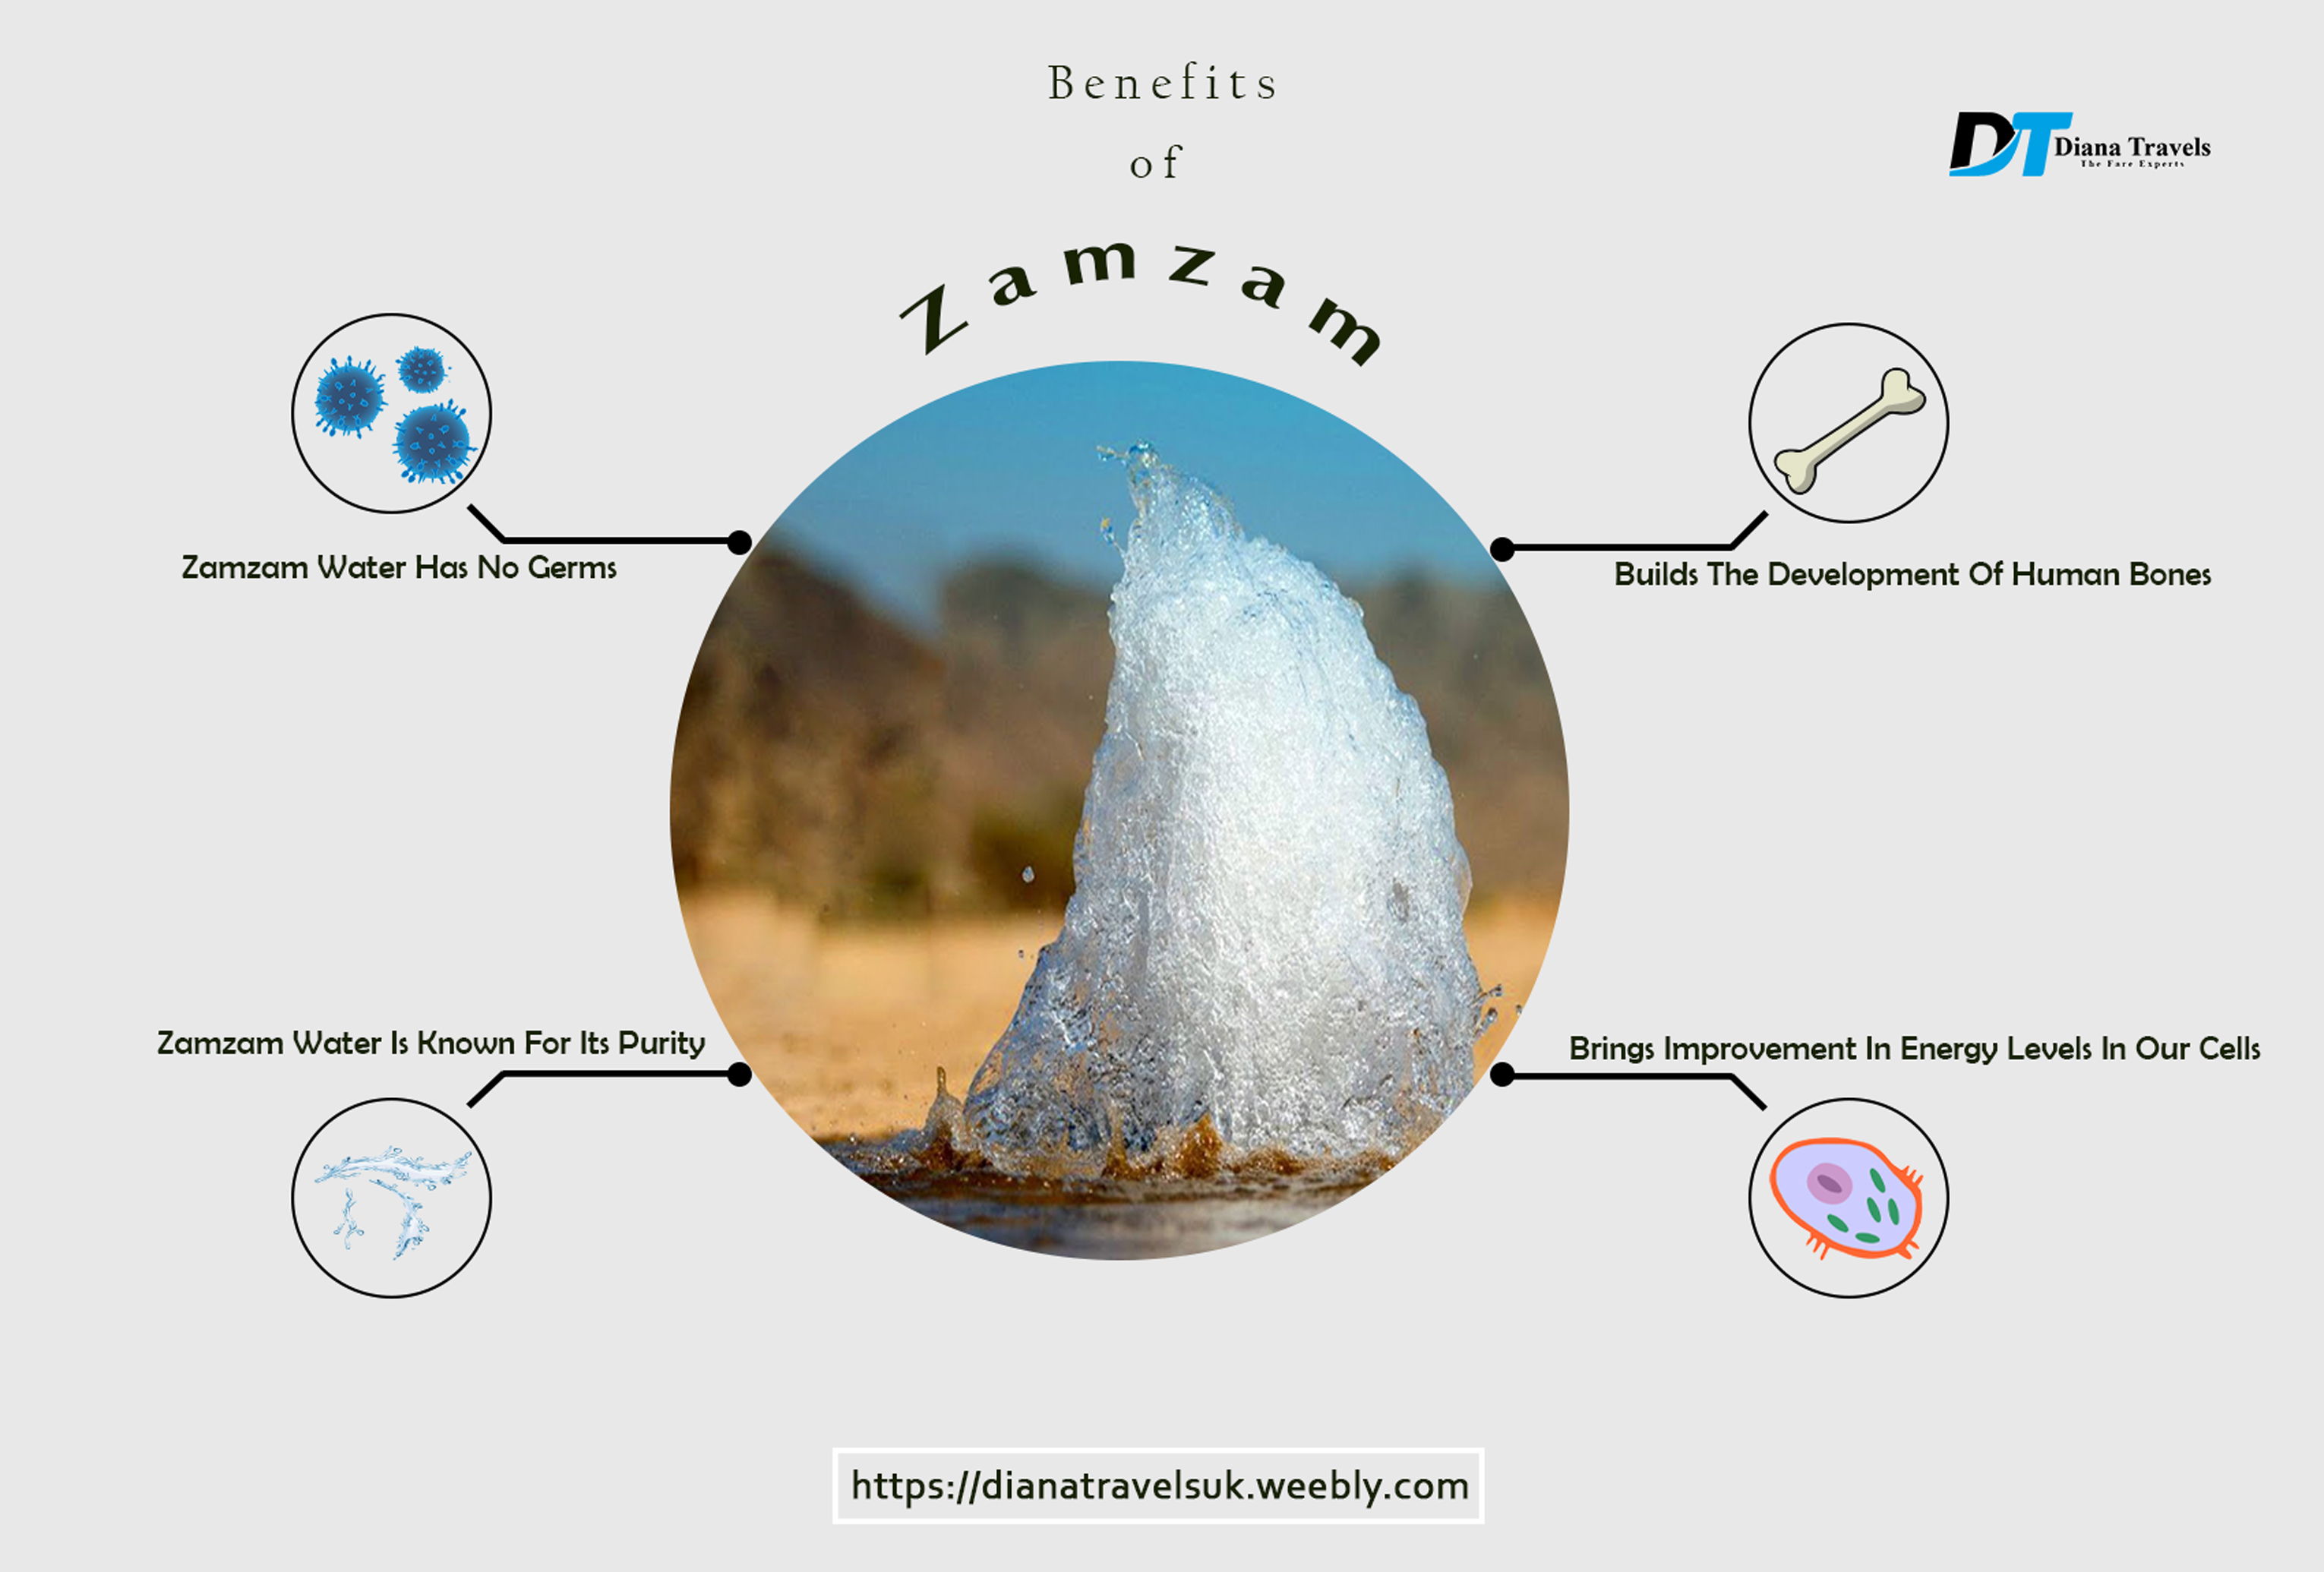 The Benefits of ZamZam Water